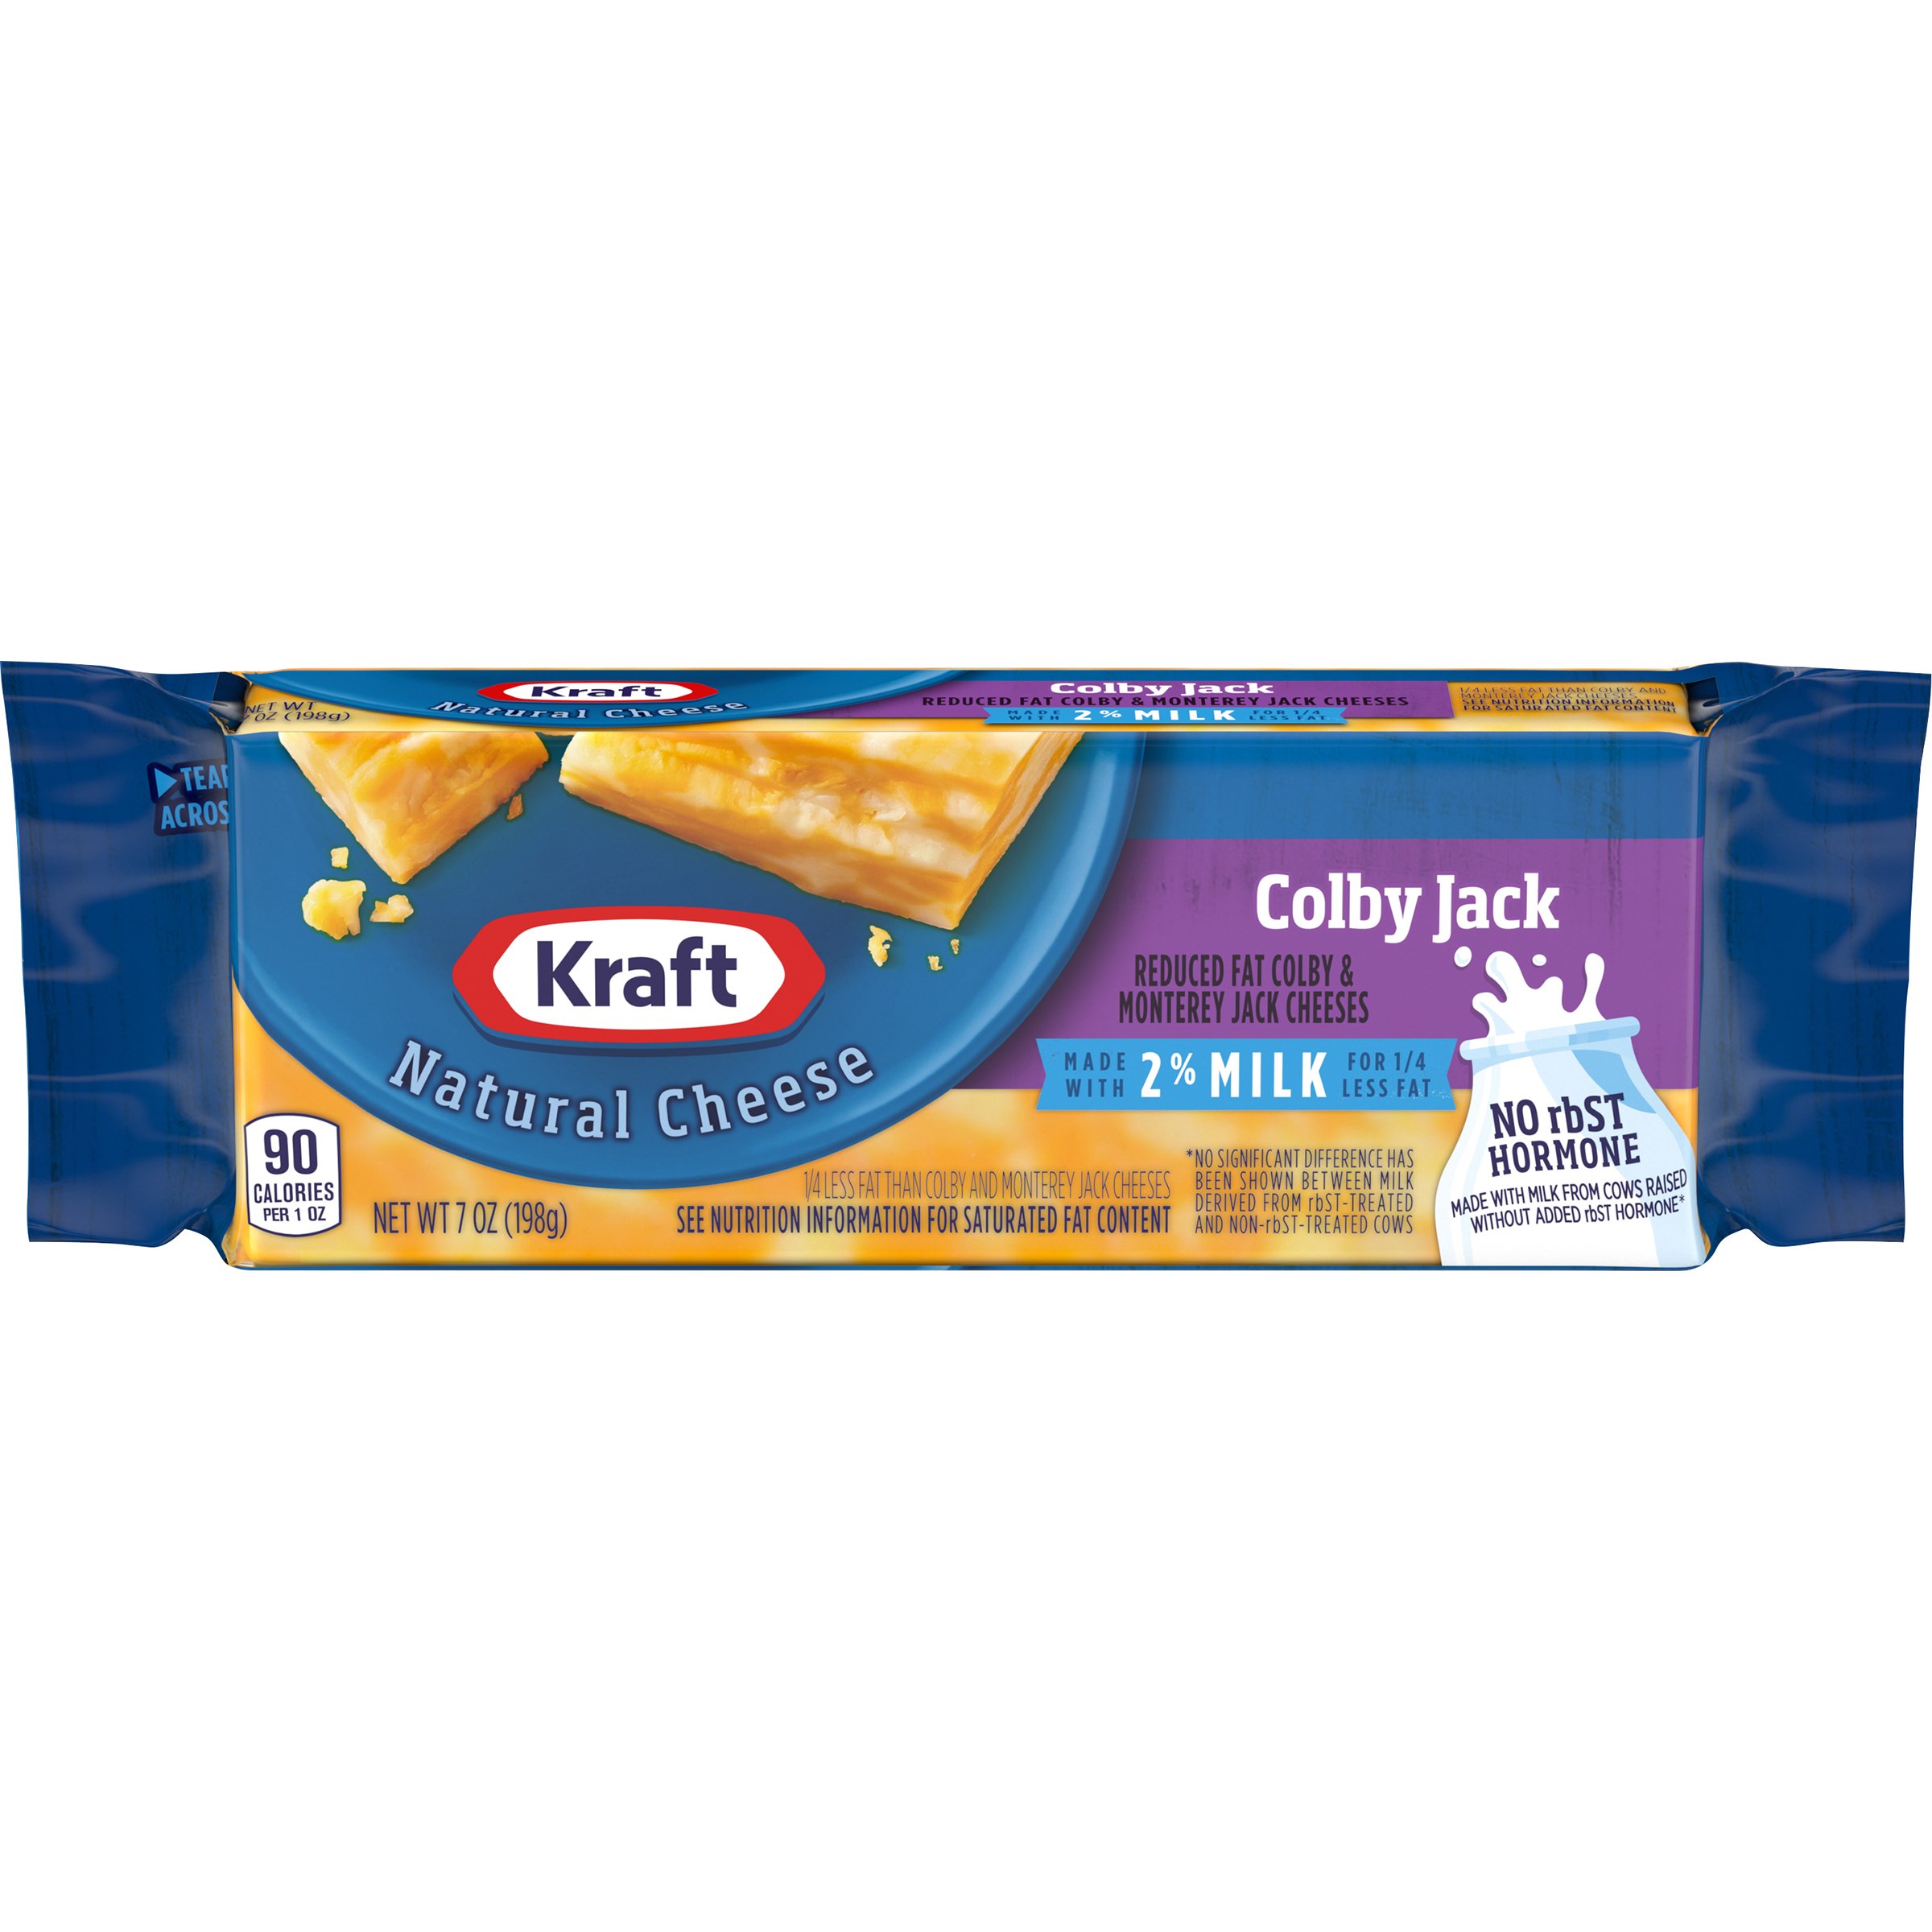 Colby Jack (2% Milk)